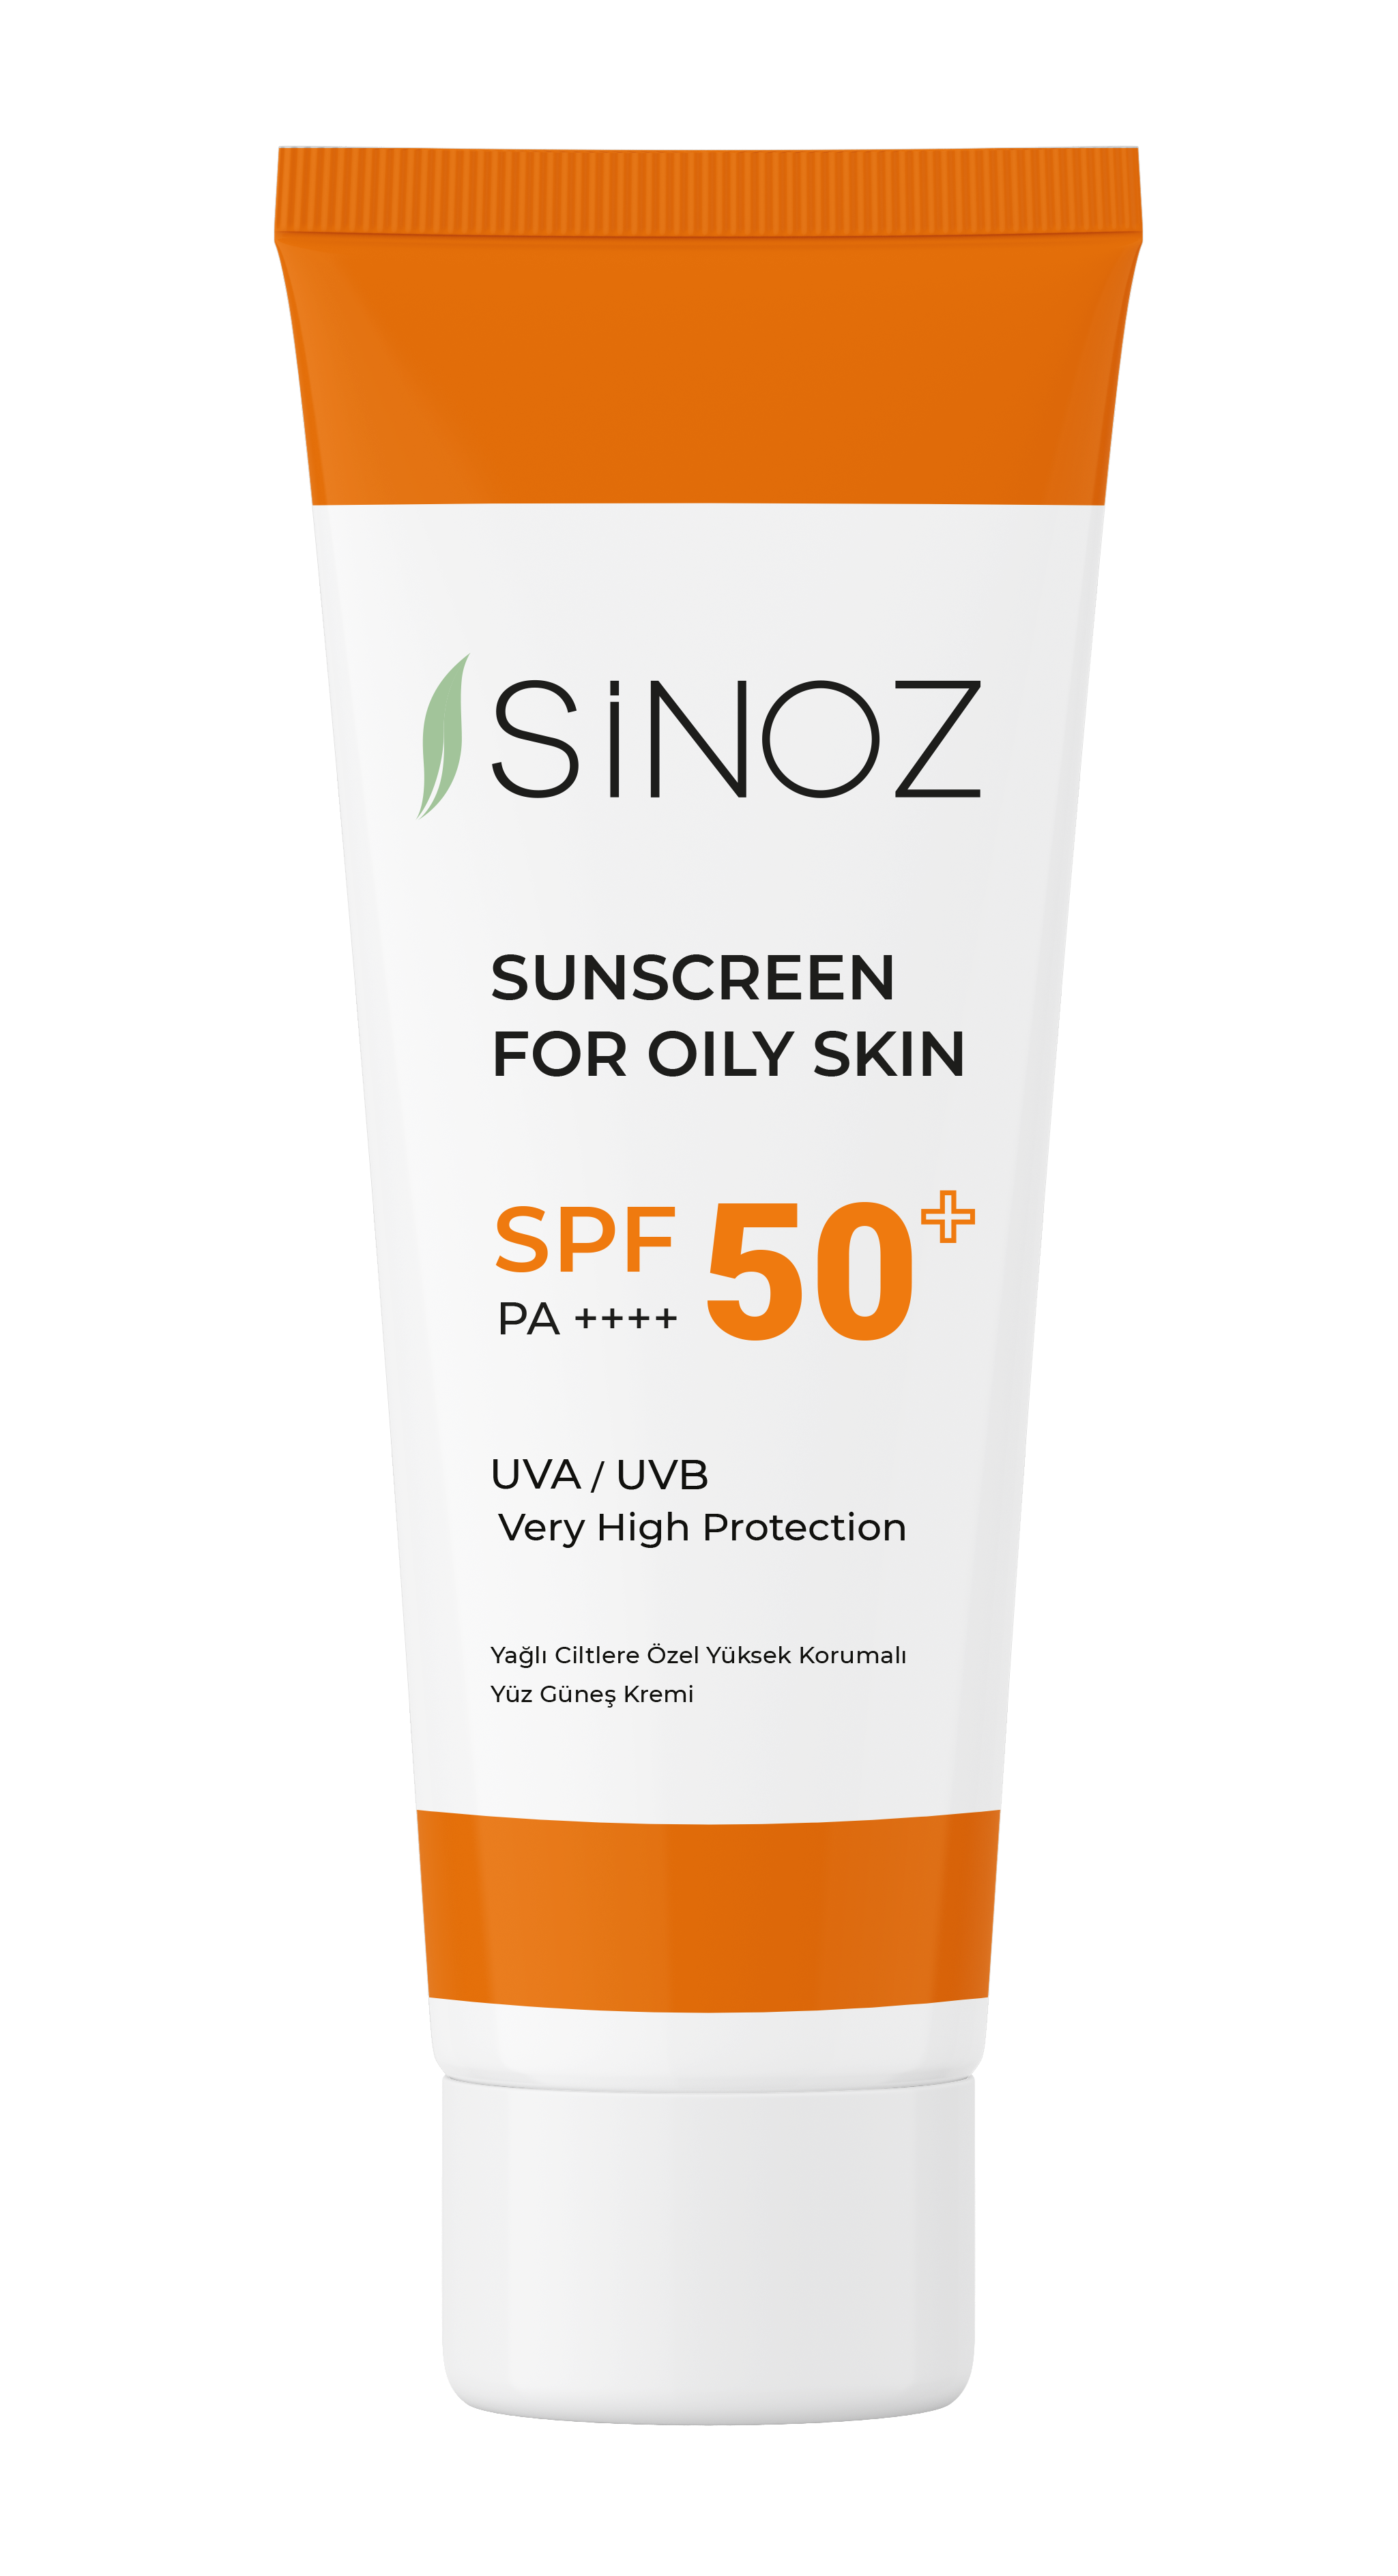 Sinoz Sunscreen for Oily Skin SPF 50+